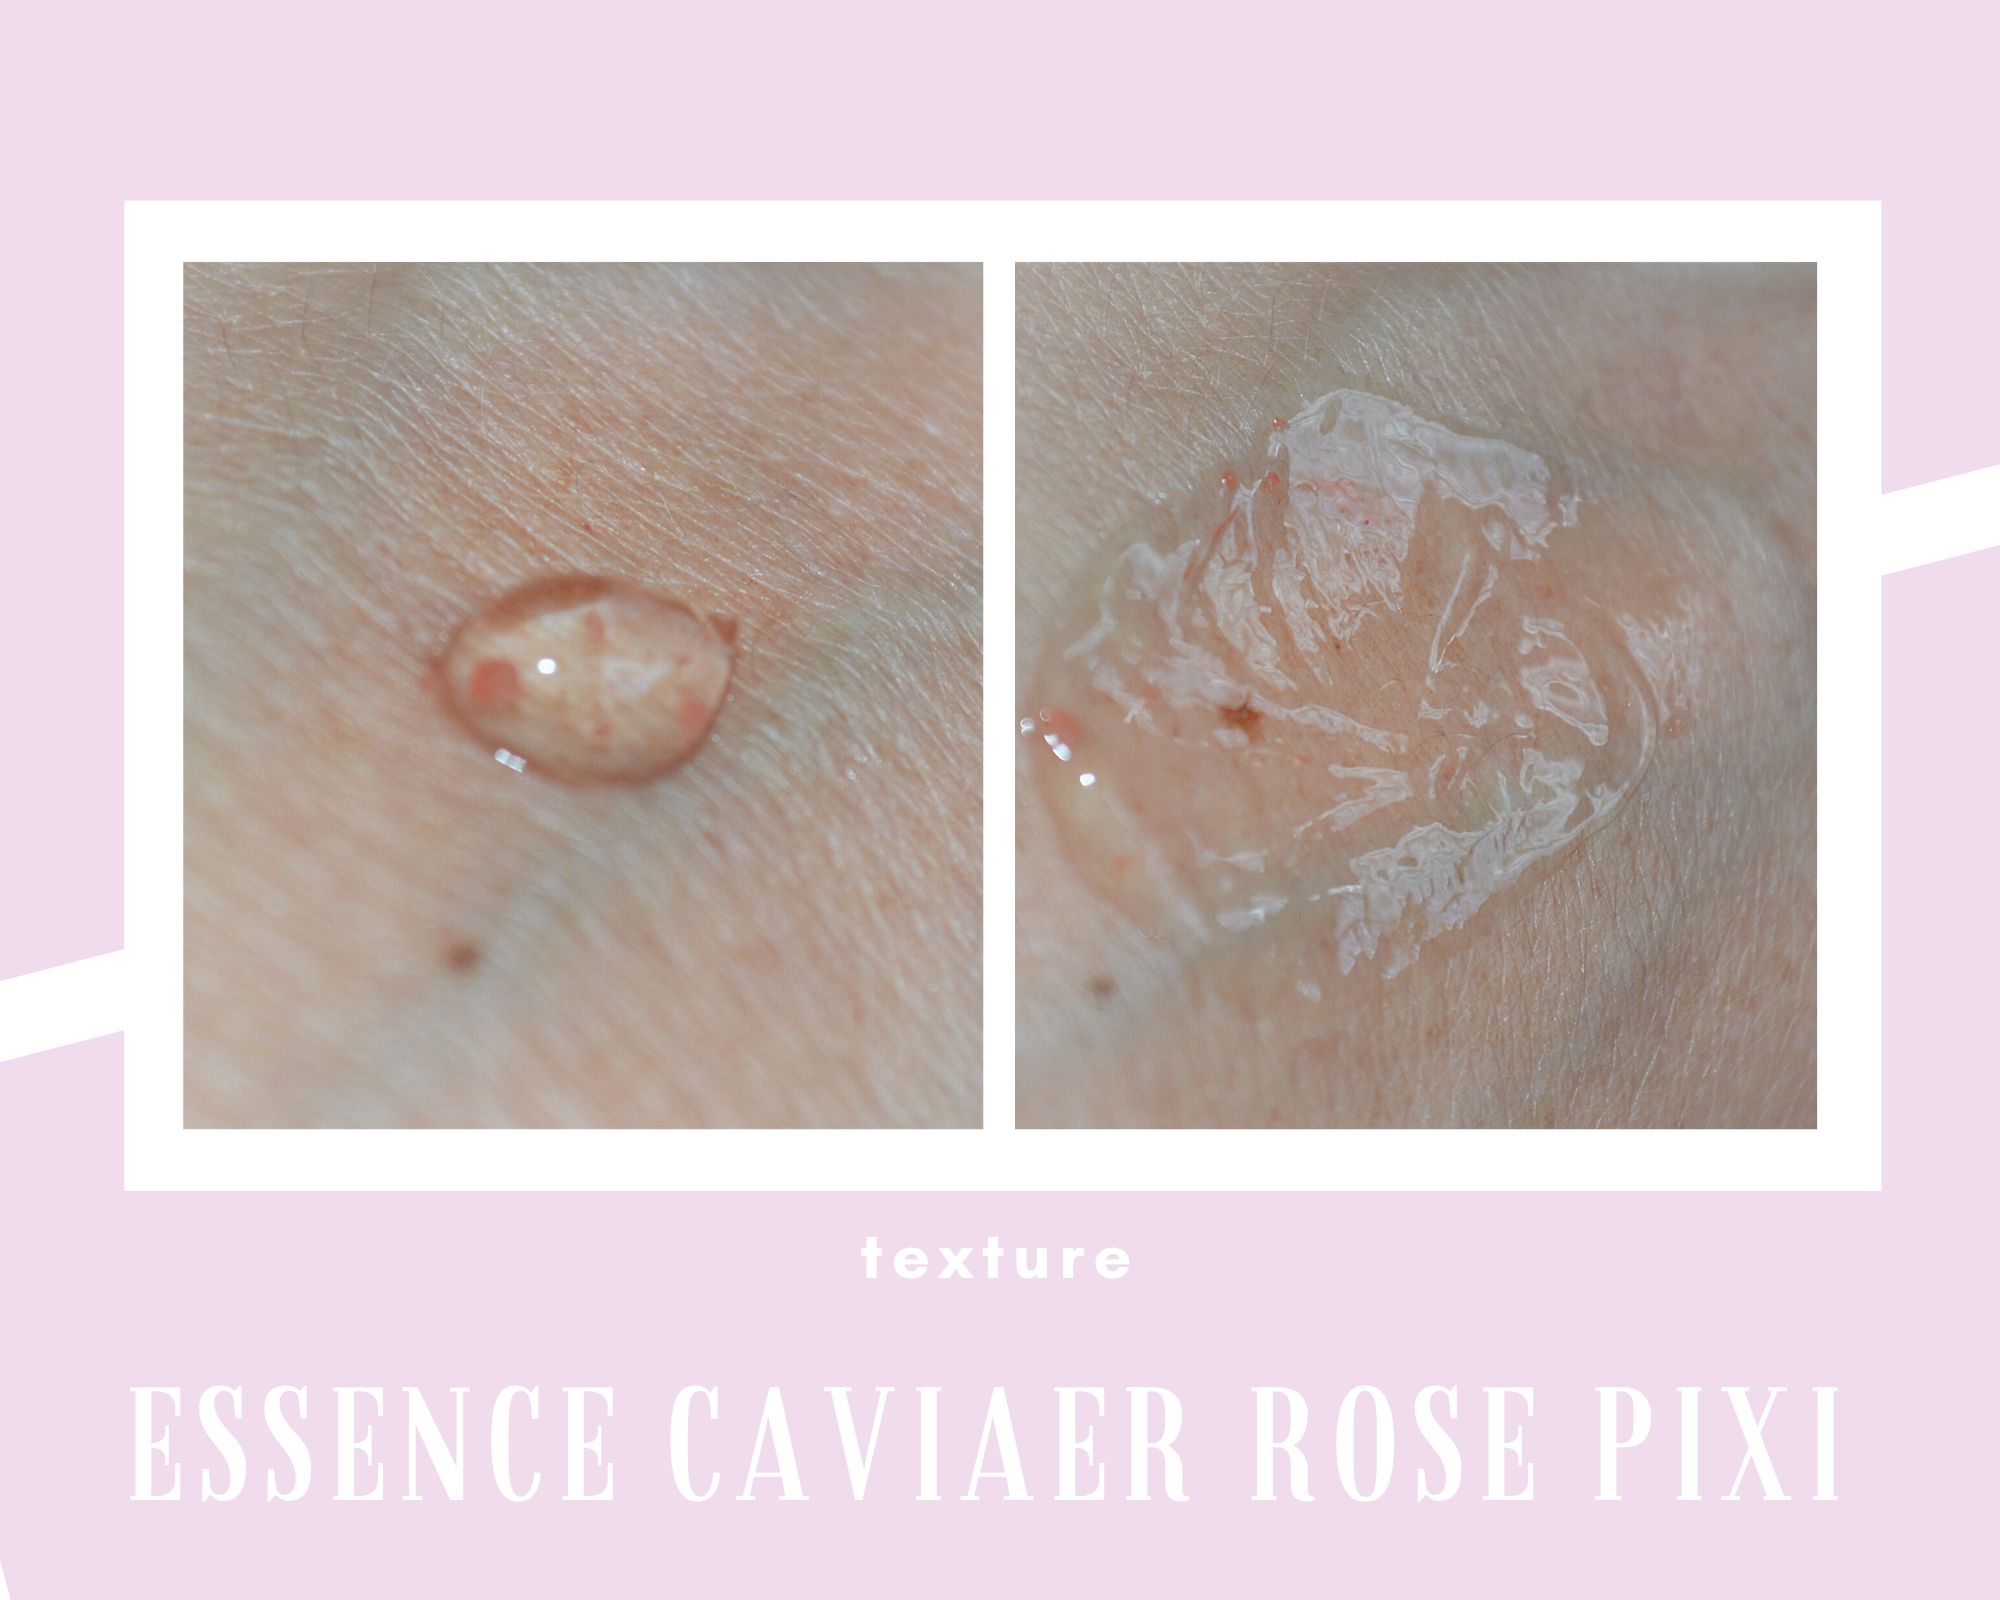 Texture essence caviaer rose pixi